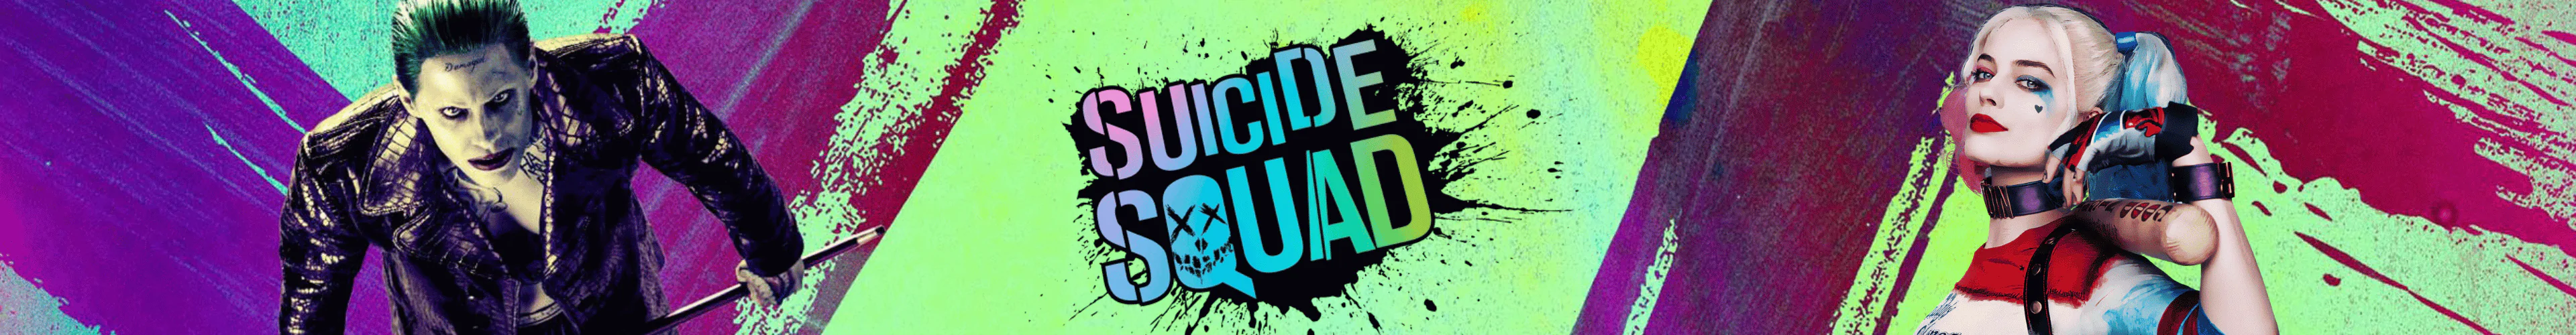 Suicide Squad t-shirts banner